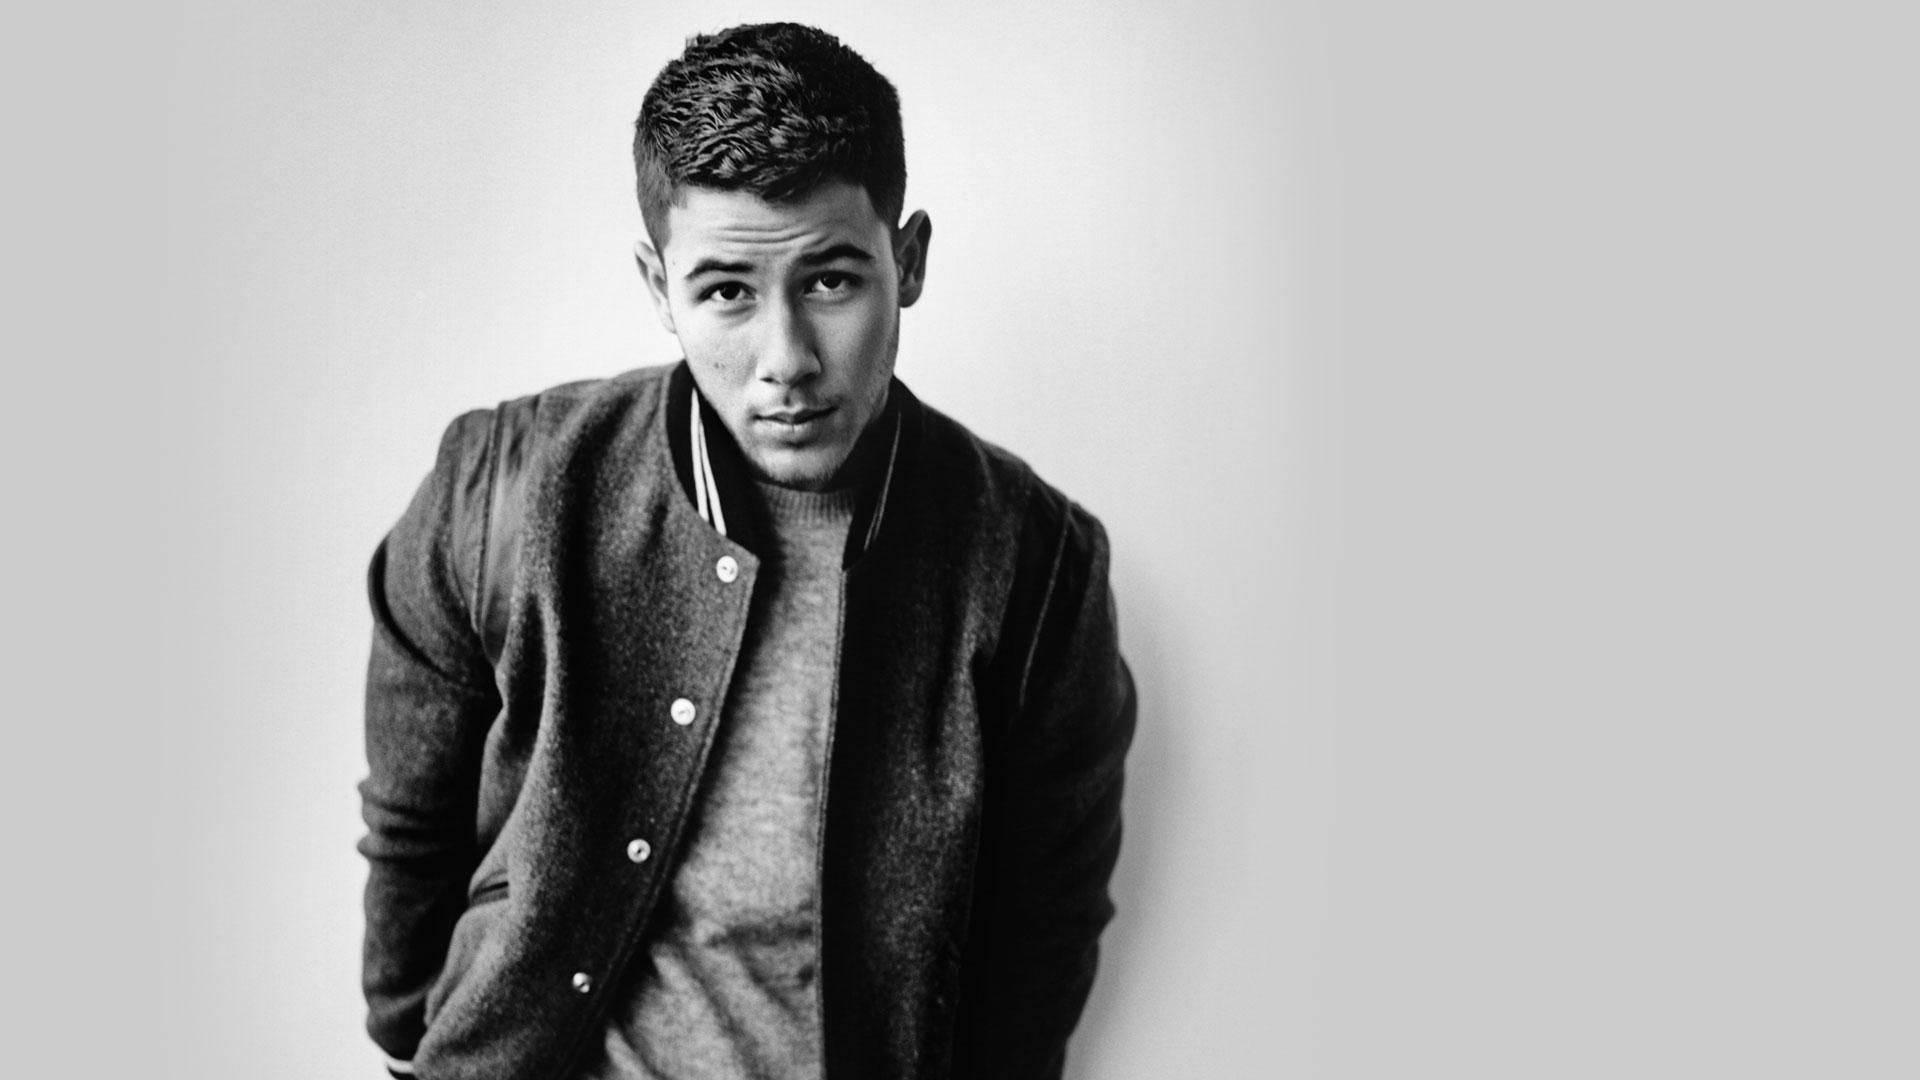 Charismatic Singer Nick Jonas Background